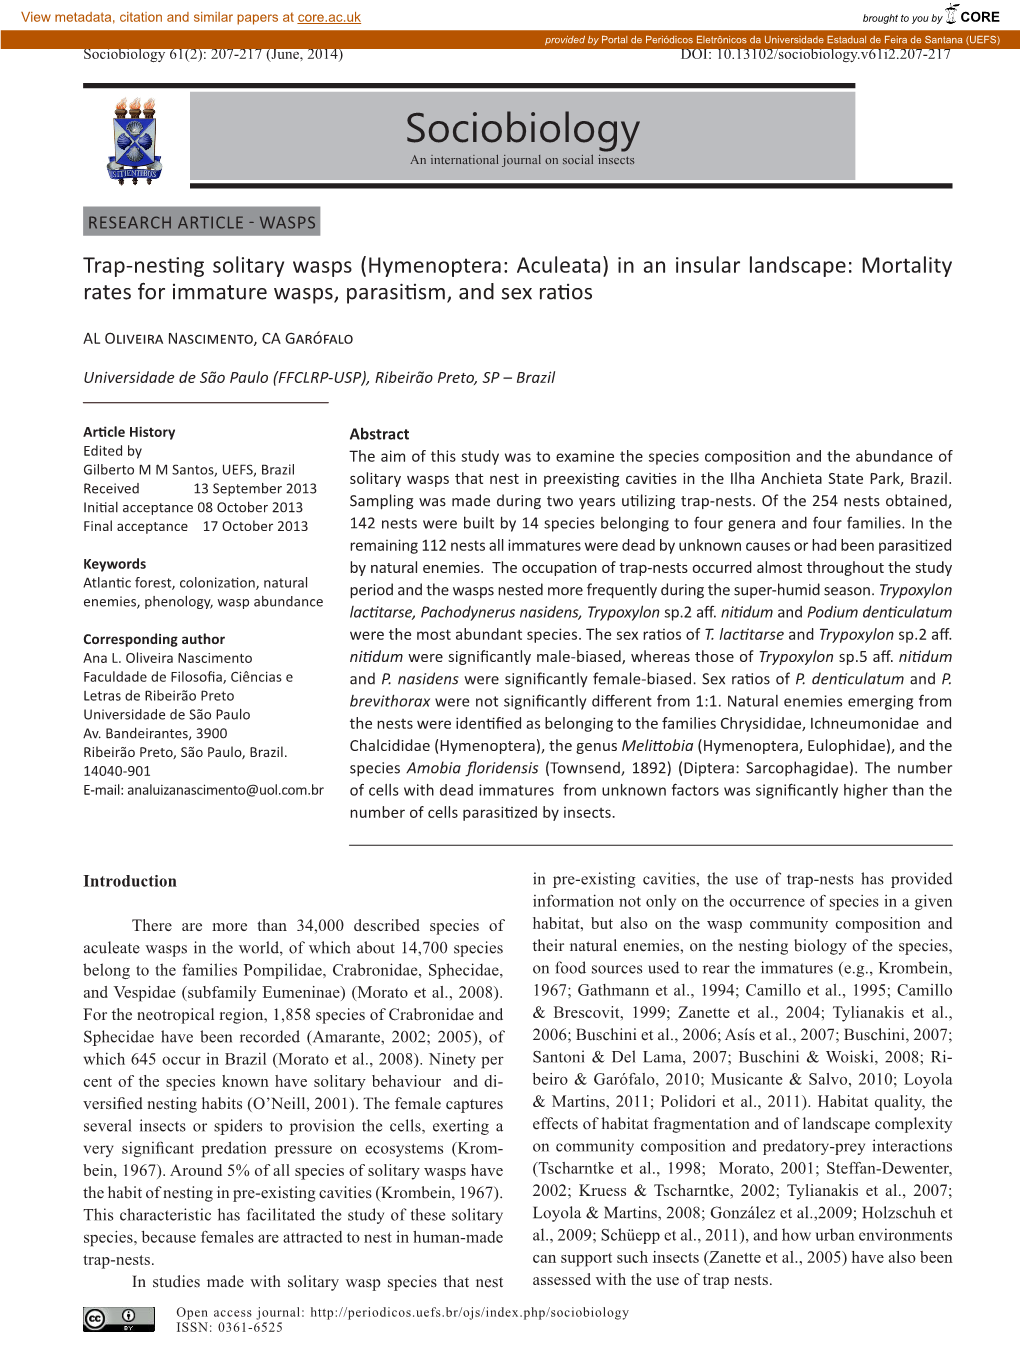 Sociobiology 61(2): 207-217 (June, 2014) DOI: 10.13102/Sociobiology.V61i2.207-217